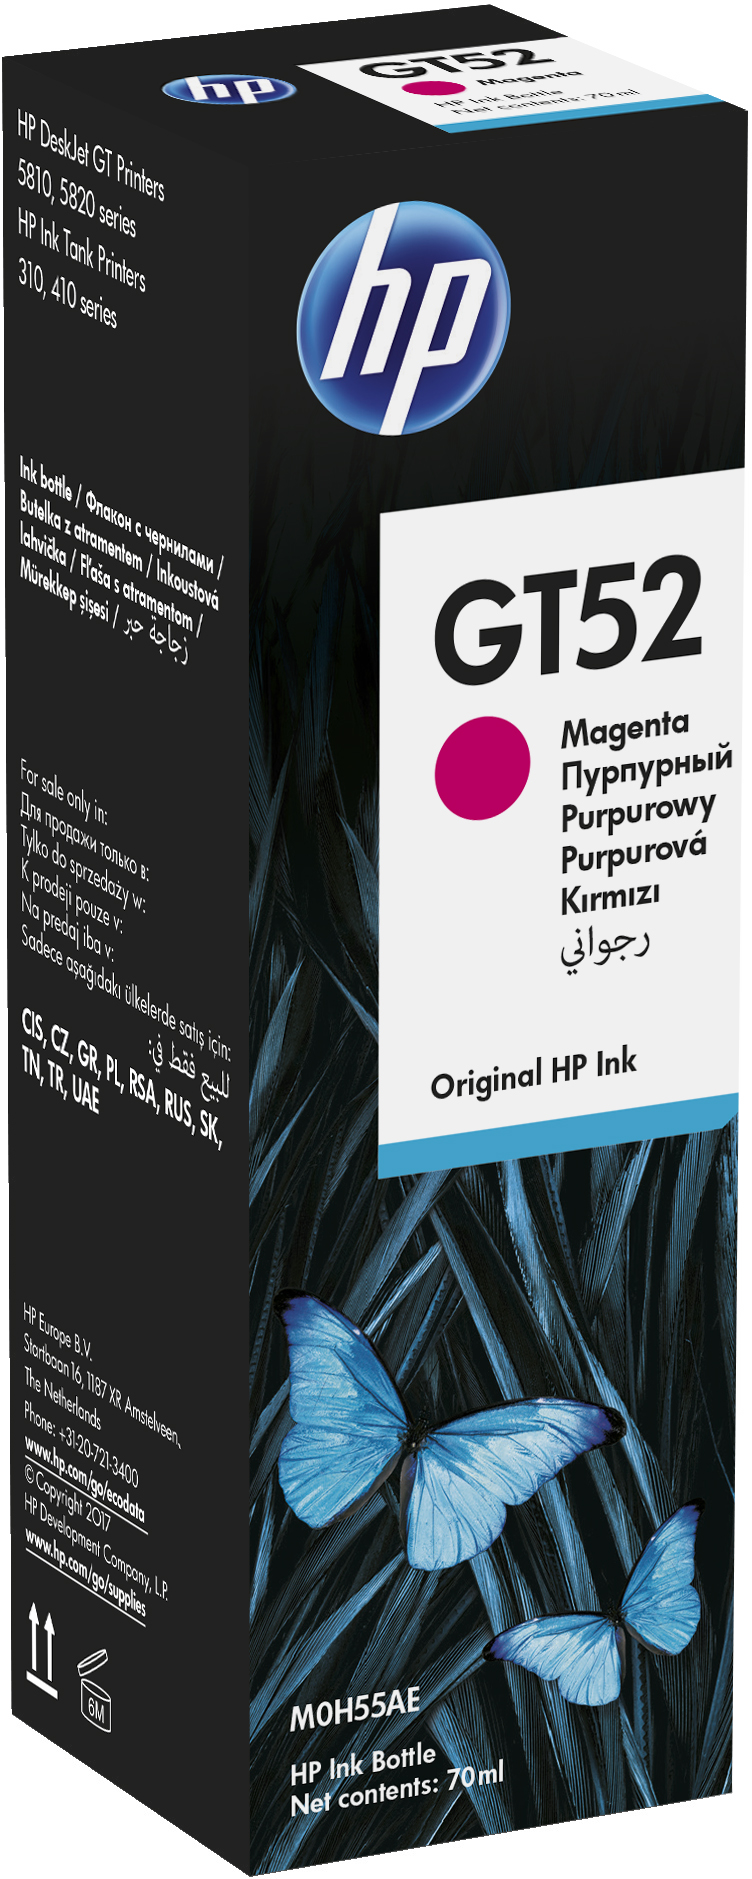 Bouteille d'encre HP GT52 Magenta